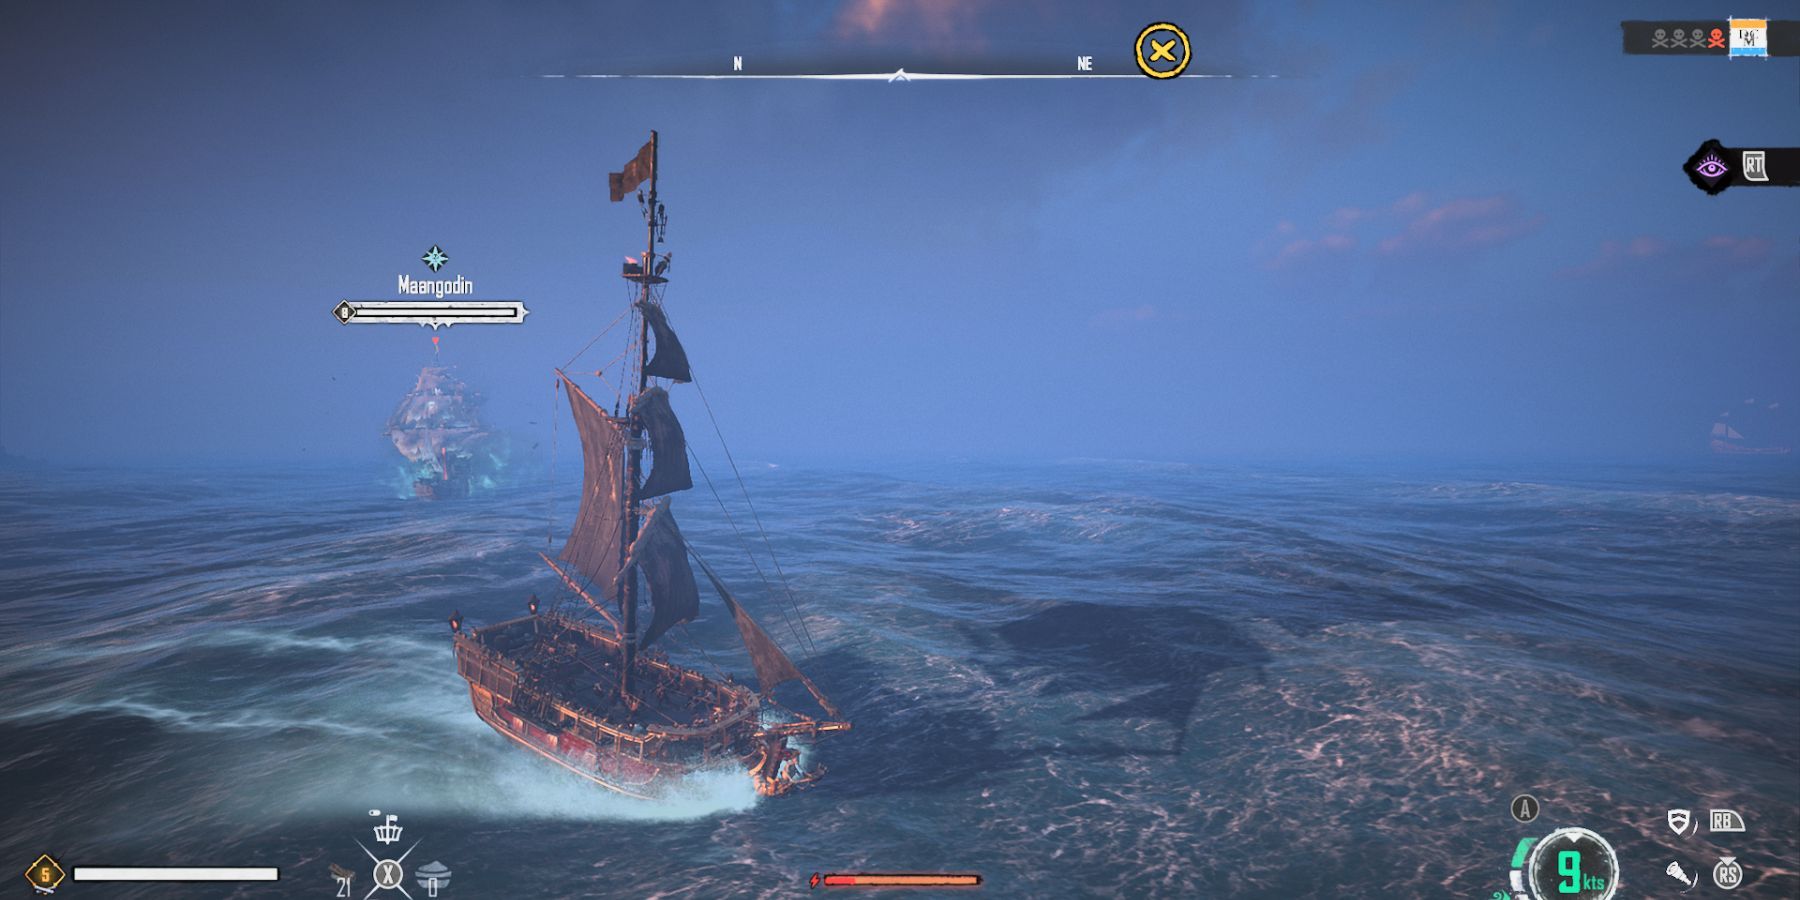 Skull and Bones Ghost Ship Maangodin Combat